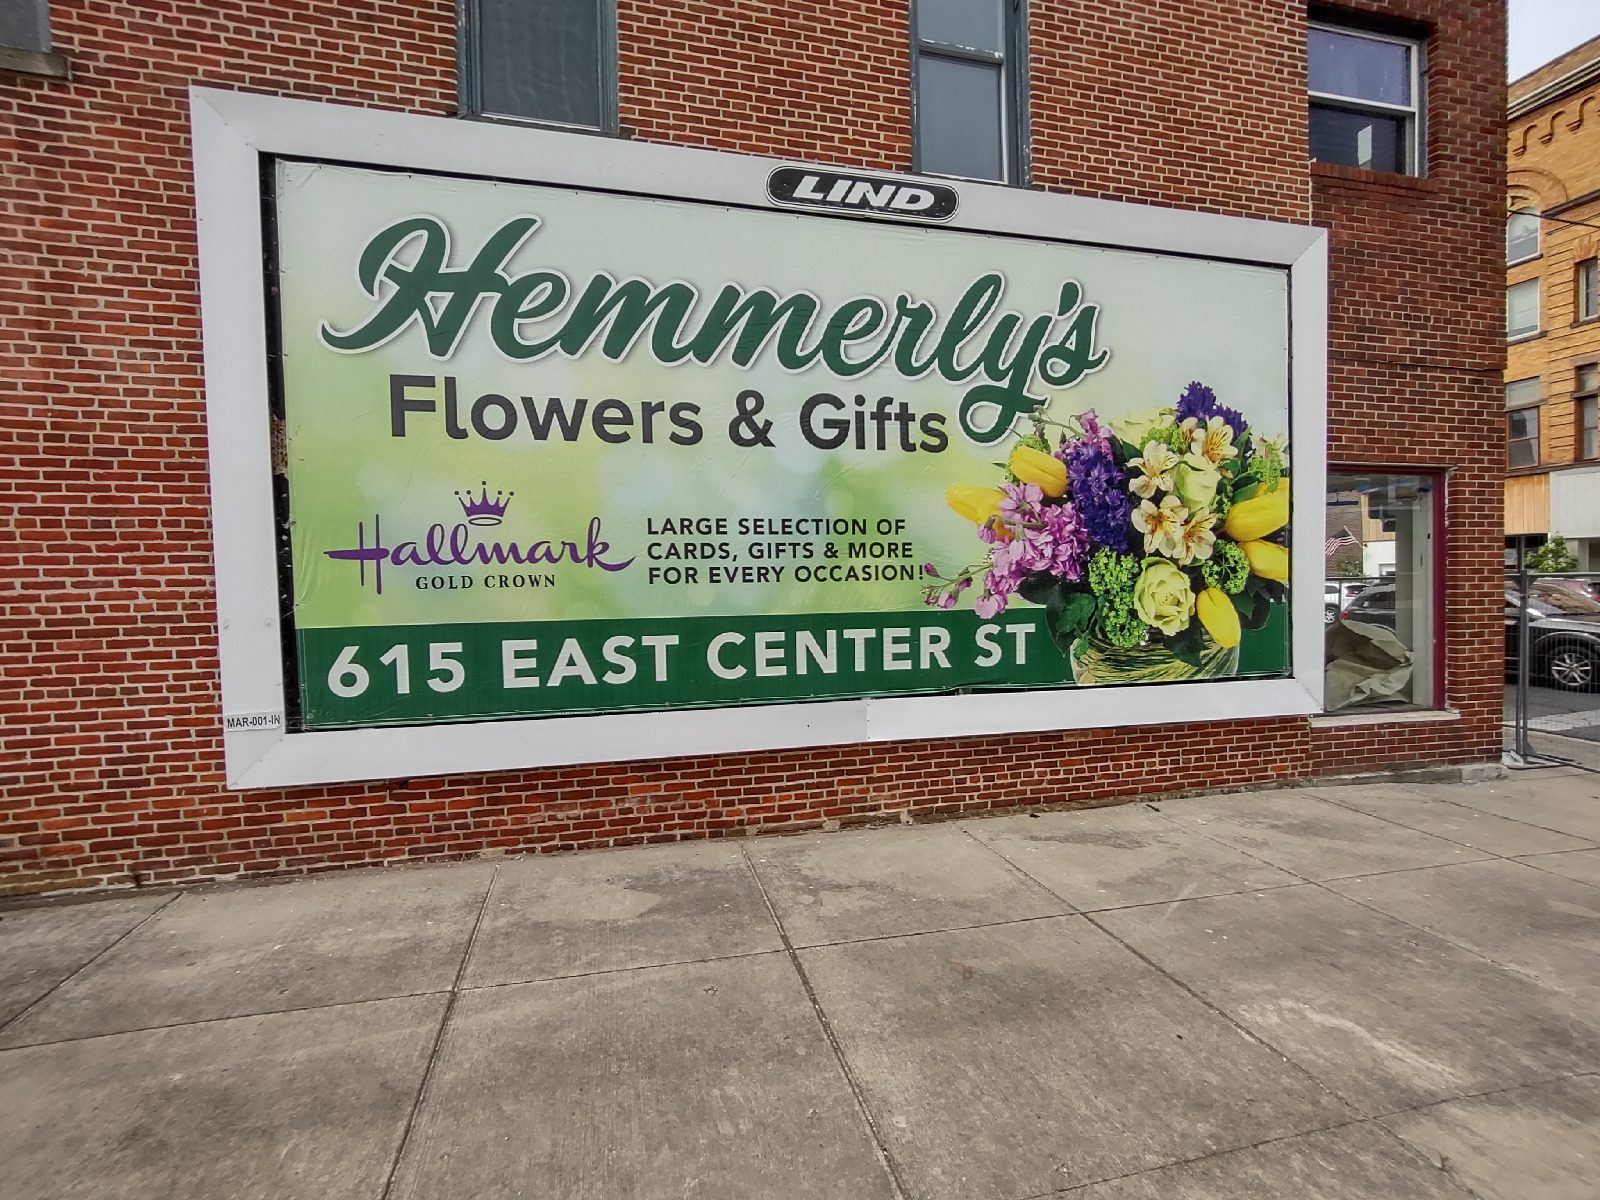 Hemmerly's Flowers billboard, floral billboard, Hallmark billboard